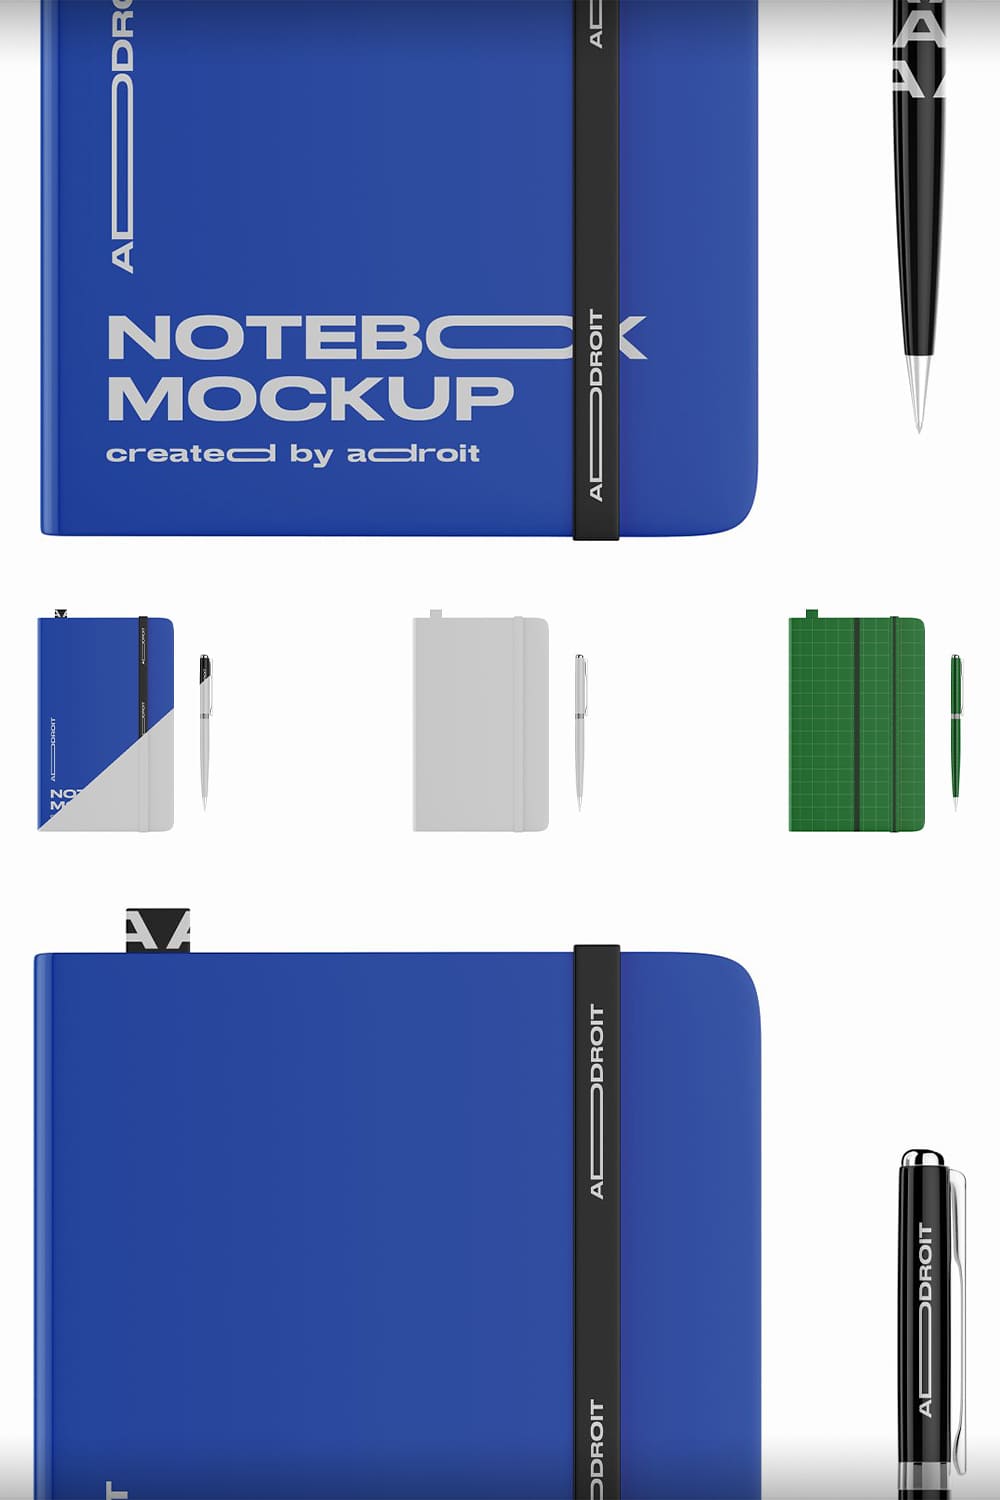 Notebook Mockup - Pinterest.